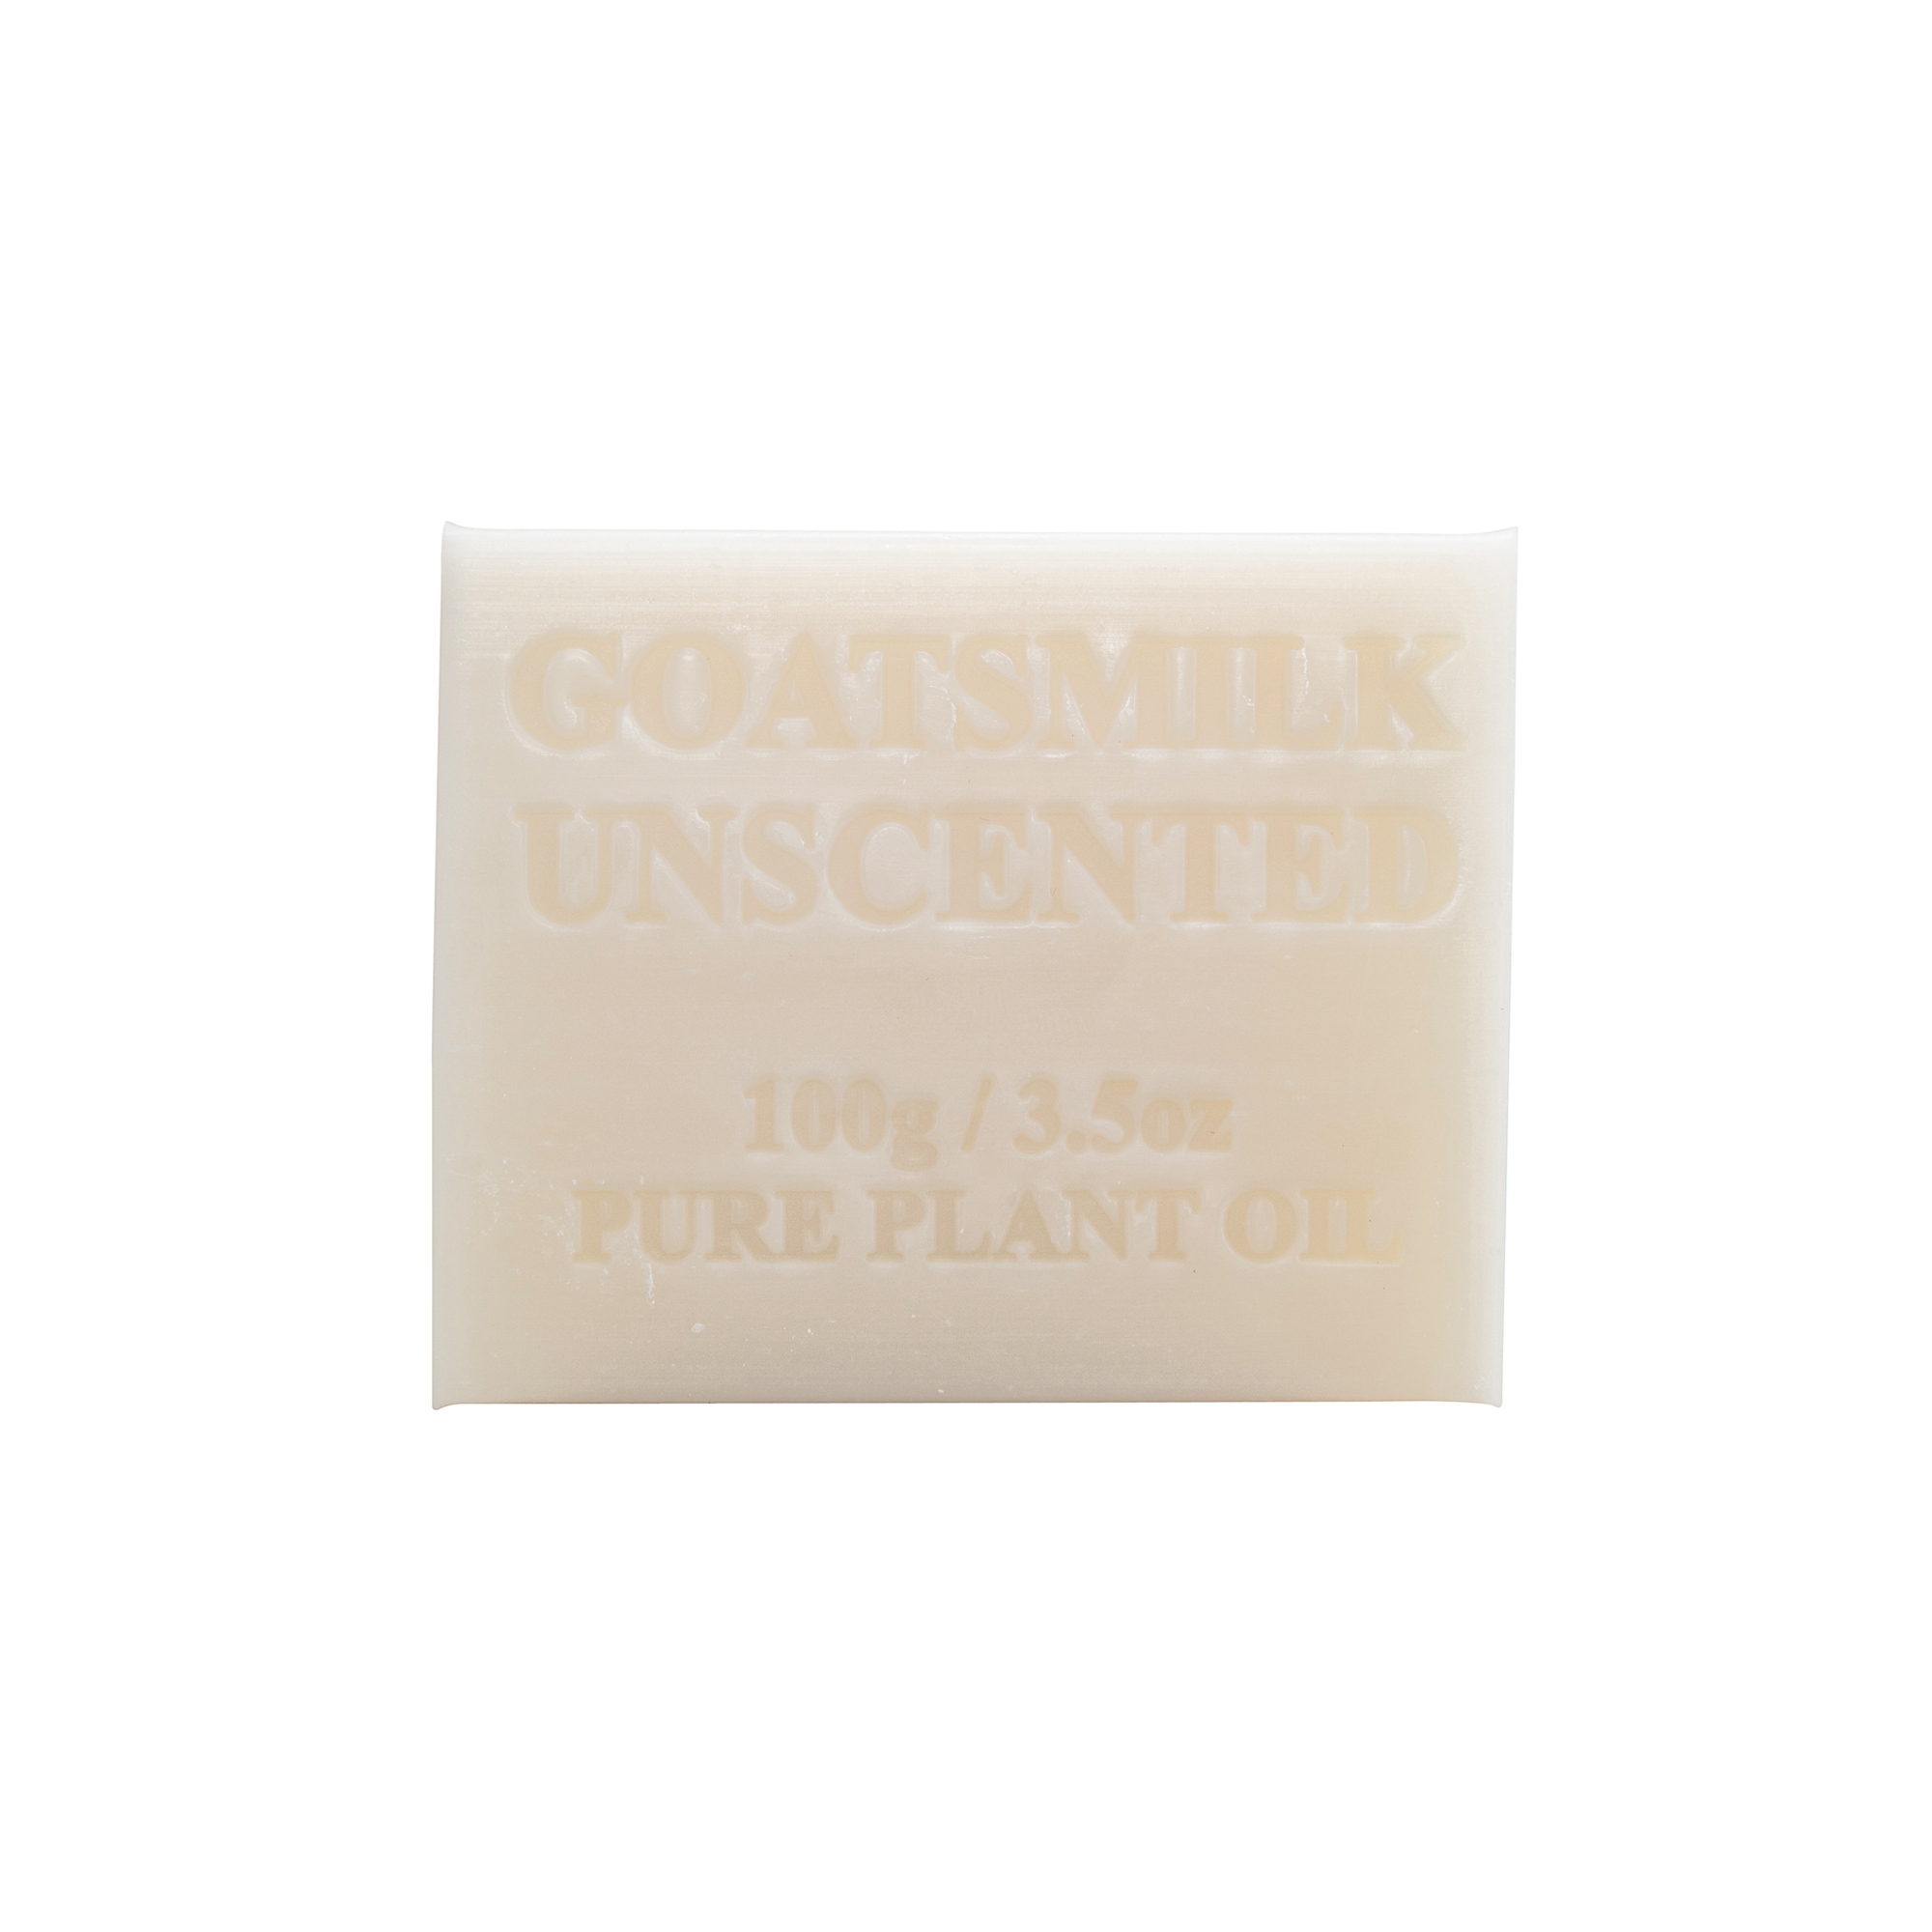 100g Goatsmilk Unscented Soap x100 Carton